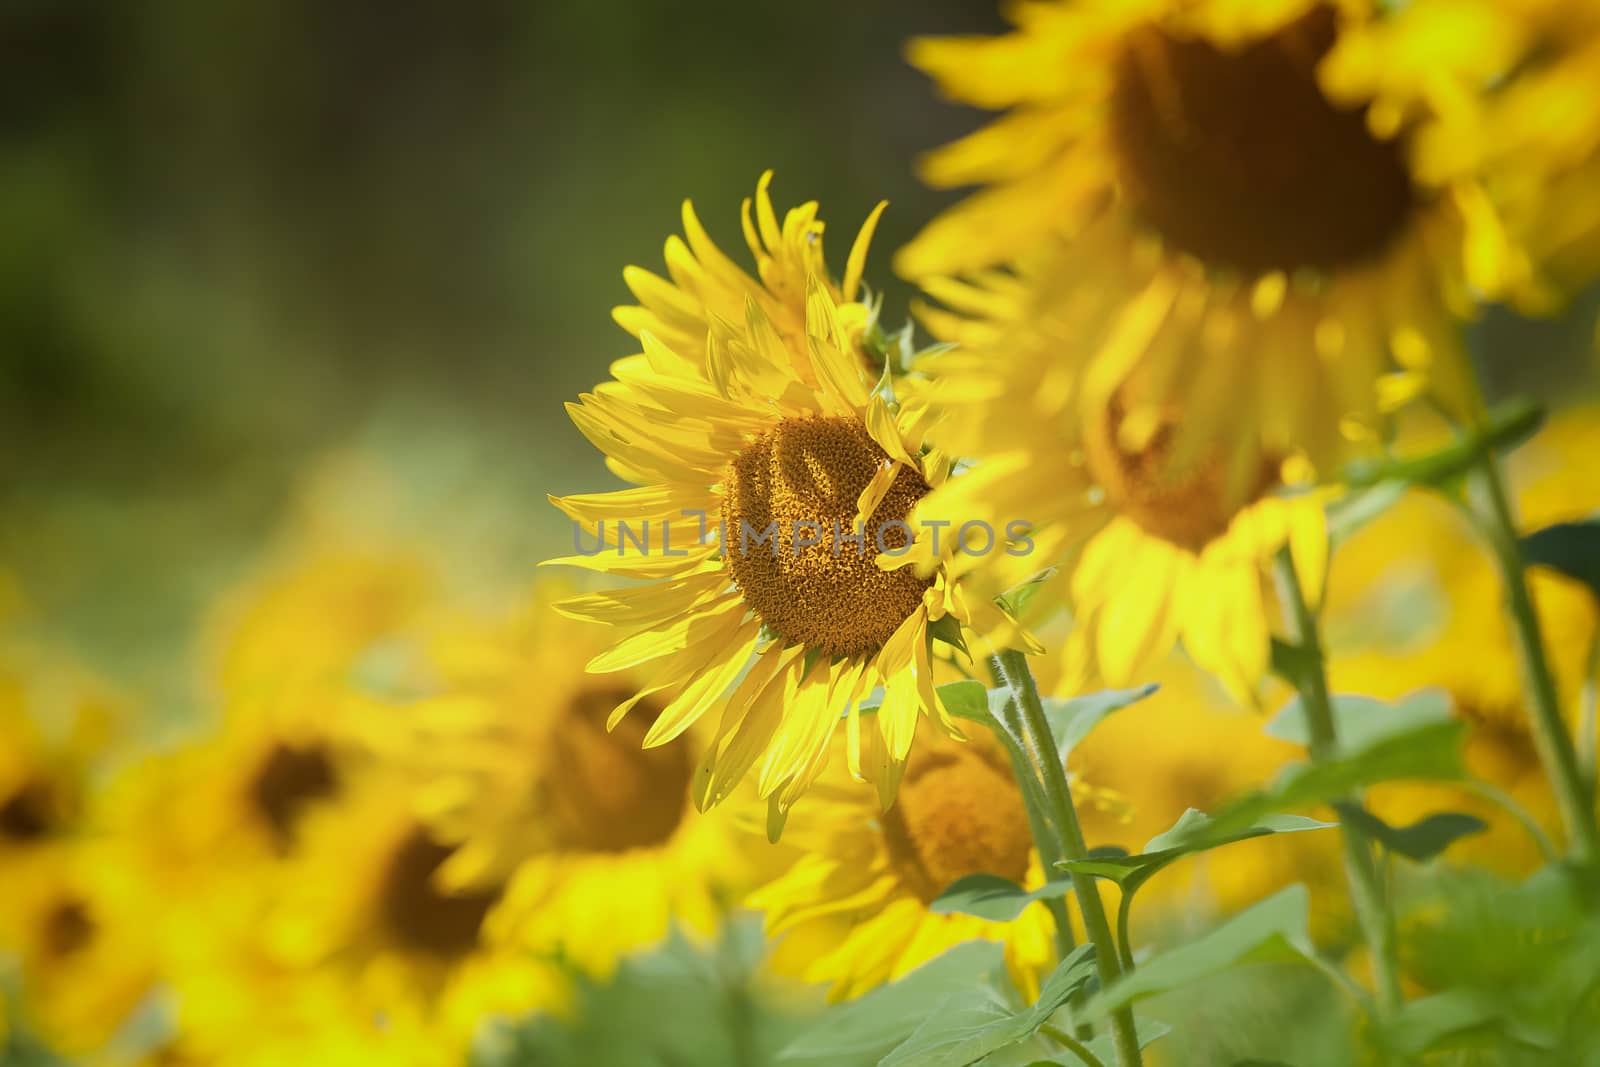 Sunflower field in summer by Digoarpi